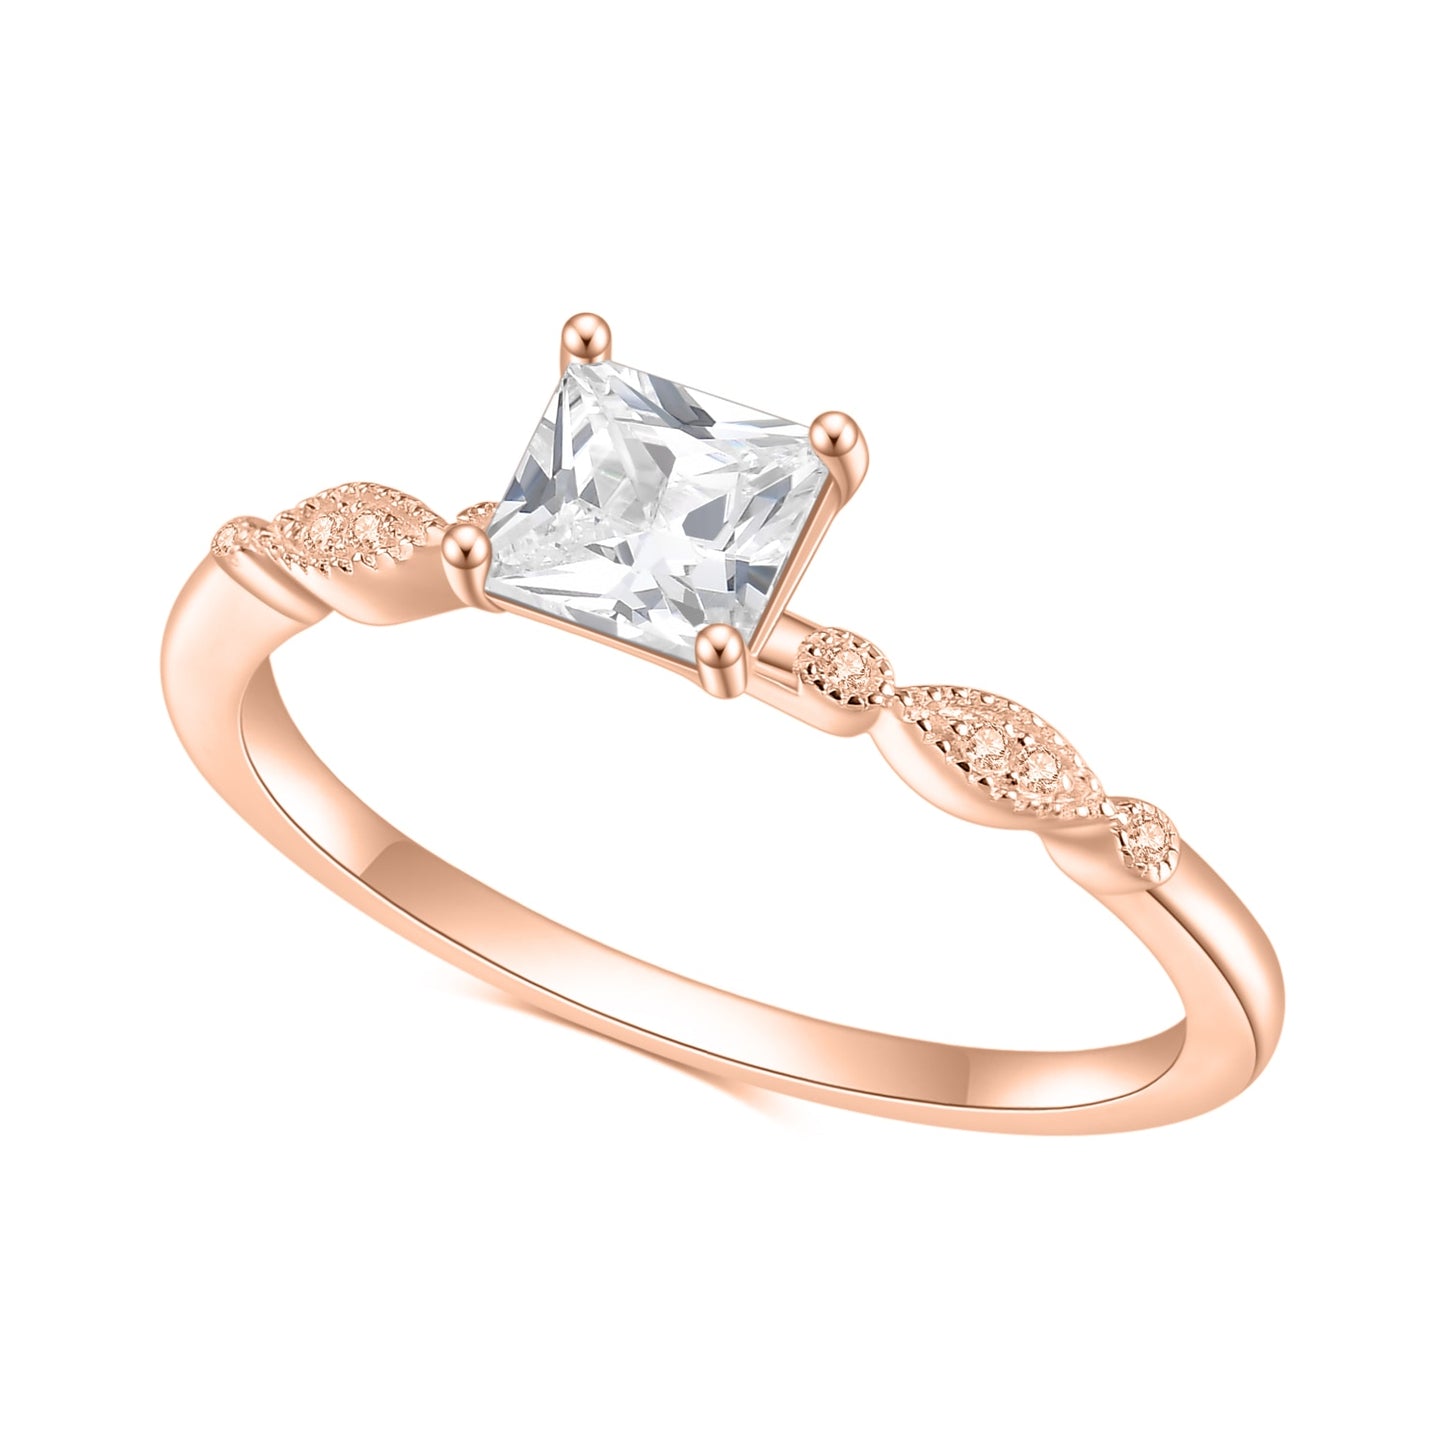 A rose gold art deco princess cut moissanite engagement ring.